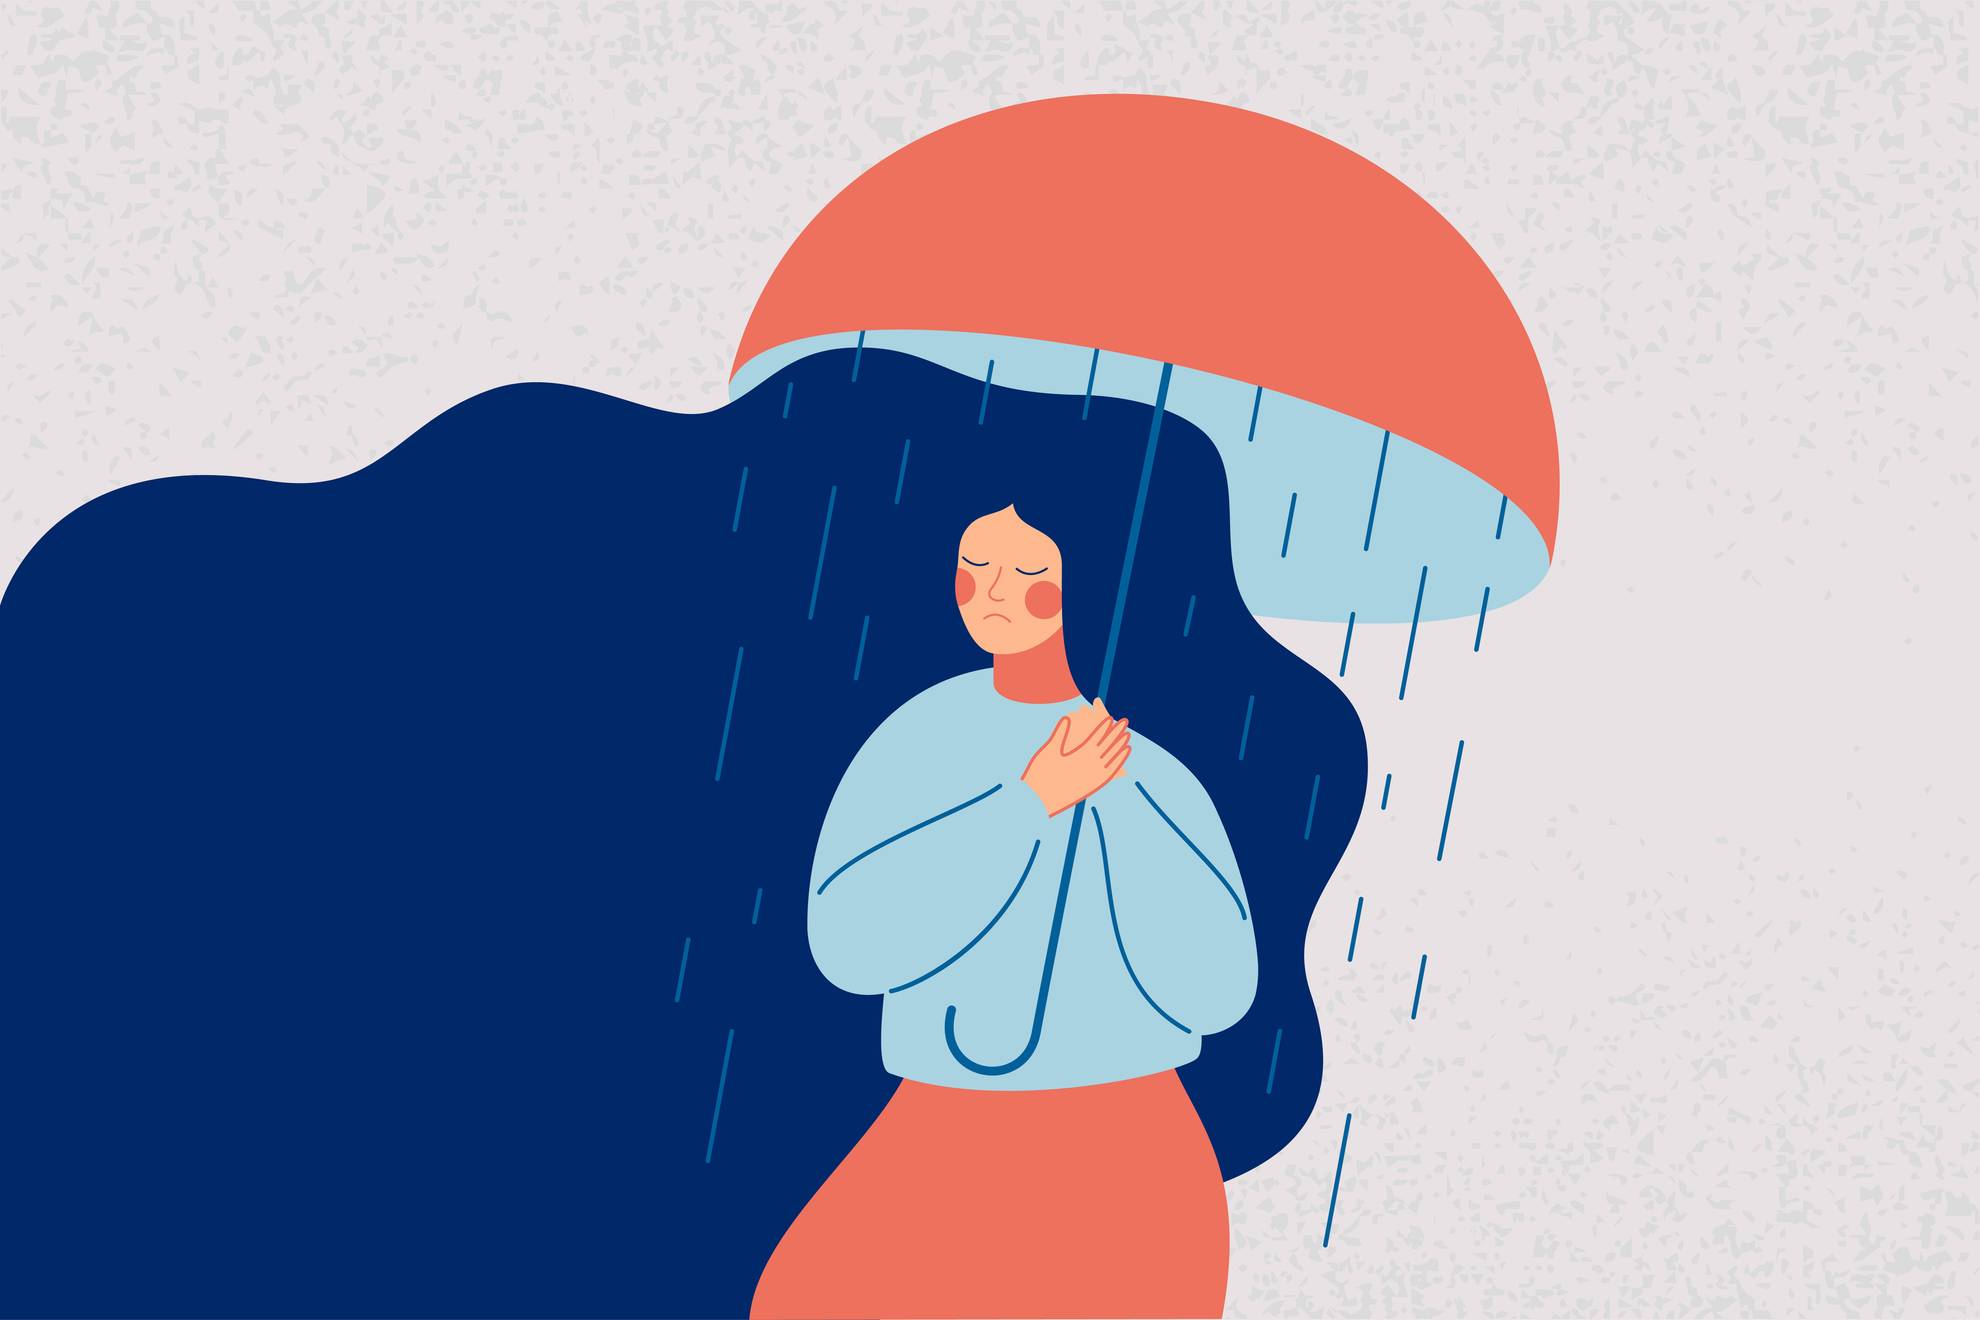 Illustration of a woman holding umbrella under a rain storm